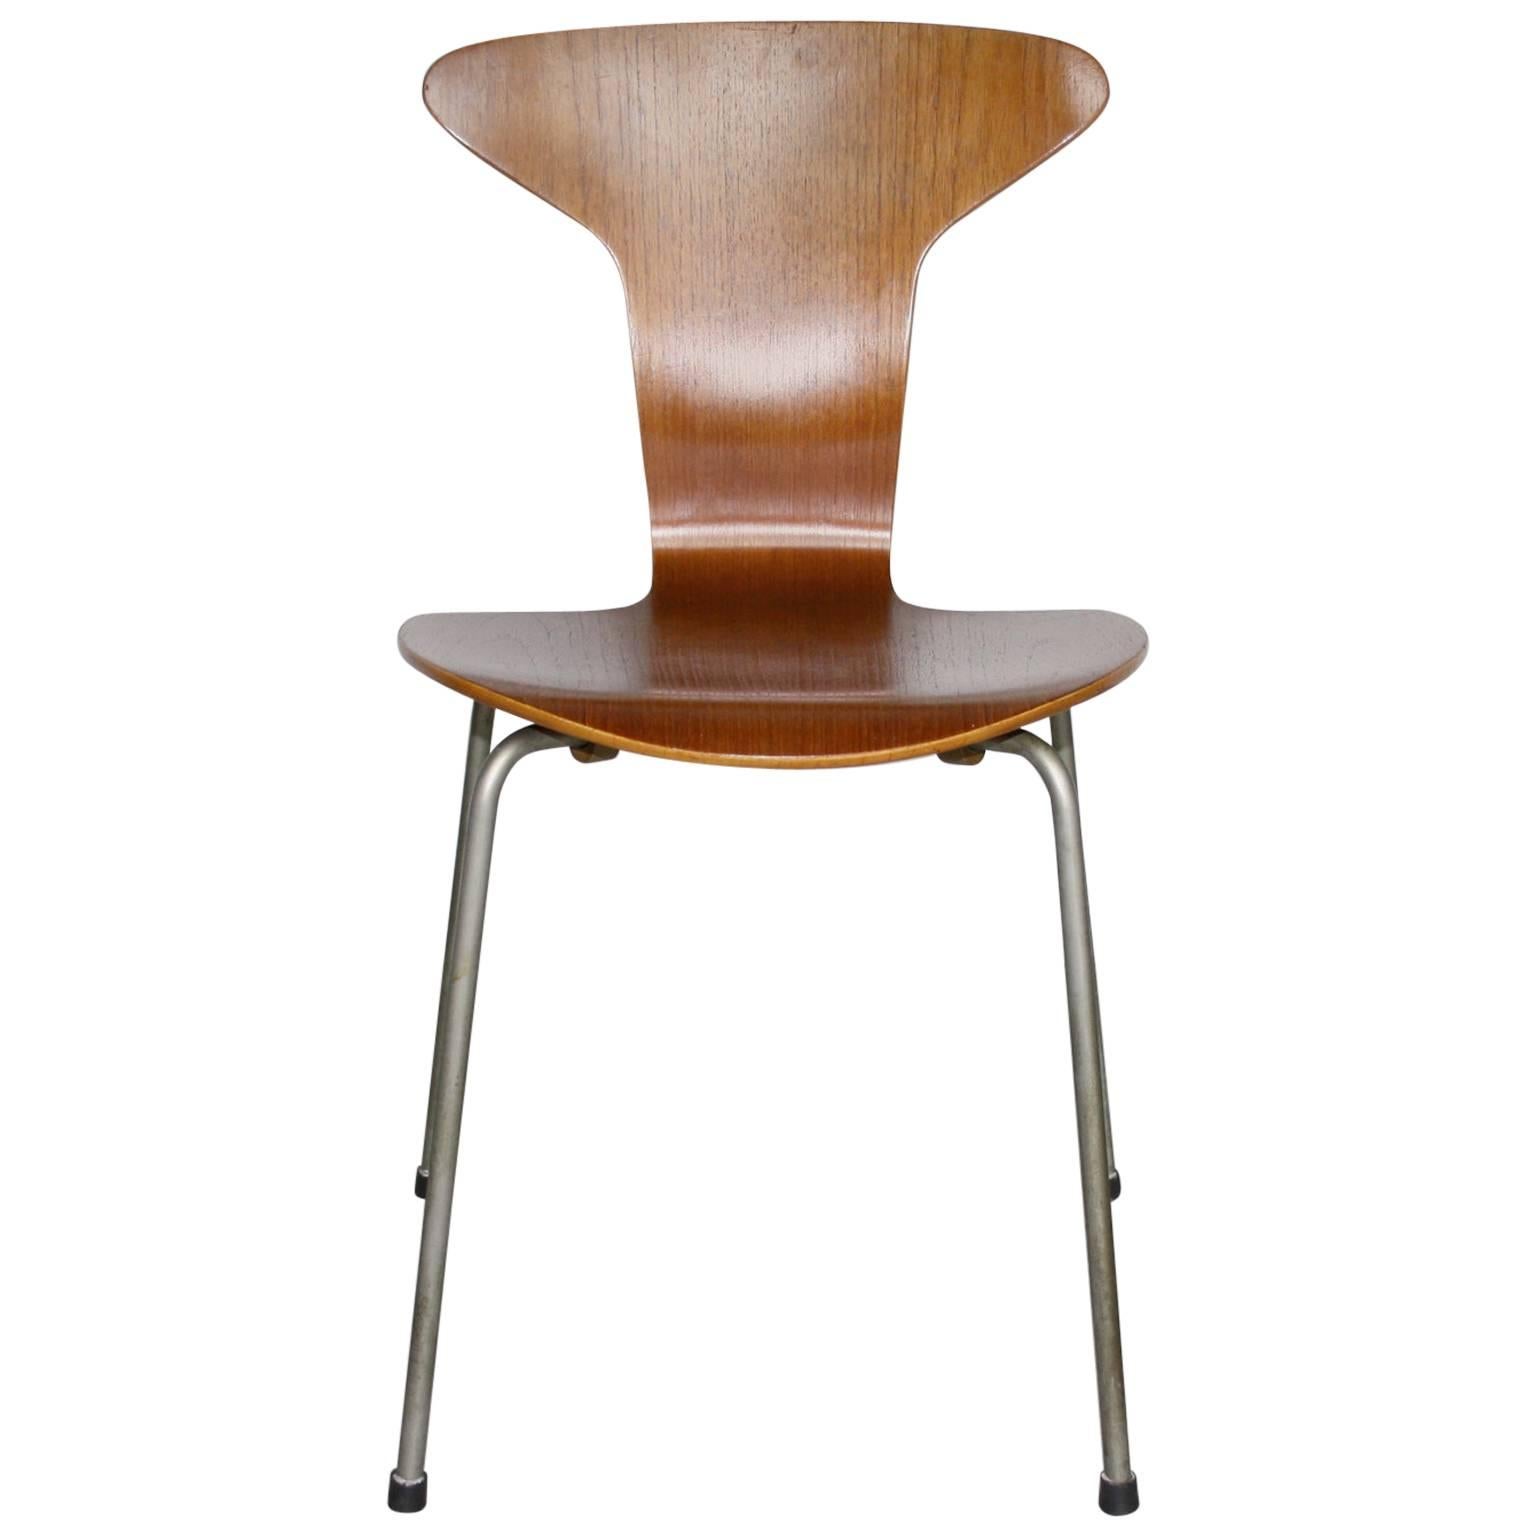 Arne Jacobsen for Fritz Hansen “Mosquito” Dining Chair For Sale